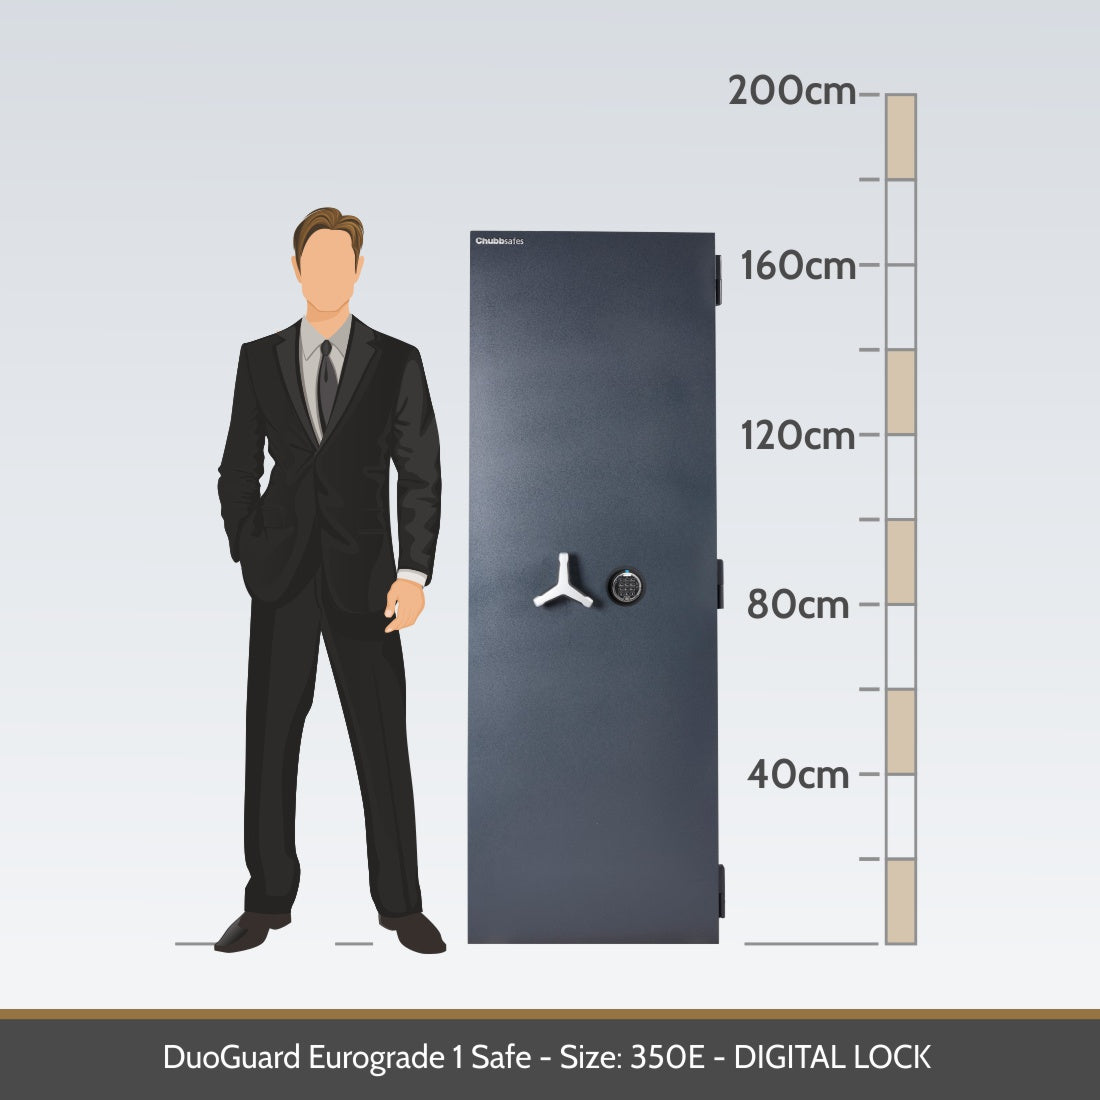 Chubbsafes, DuoGuard Eurograde 1 Safe - Size: 350E - DIGITAL LOCK